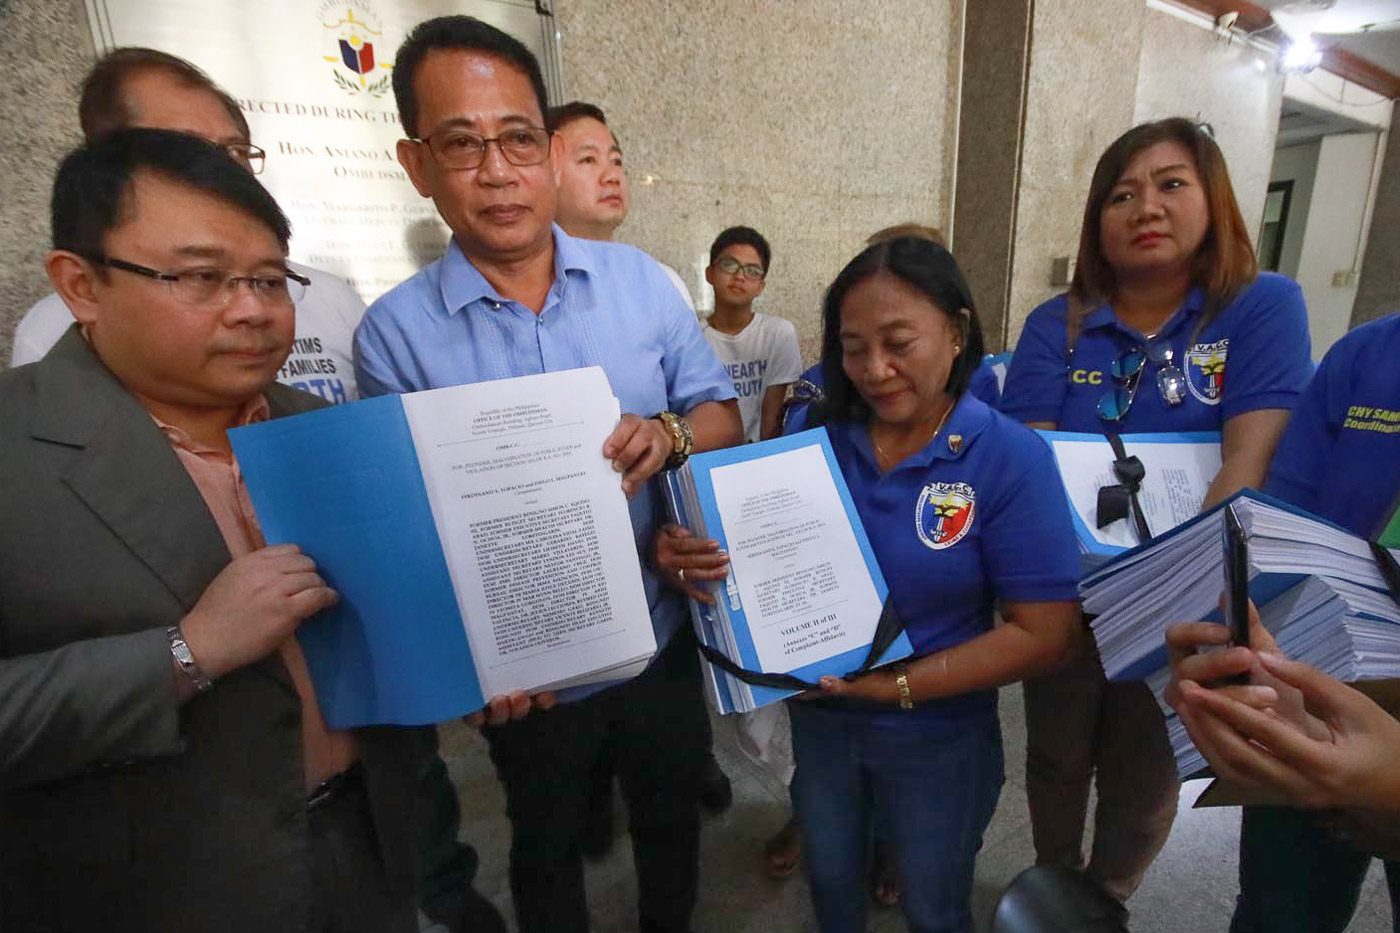 Aquino camp hits VACC ‘pattern’: File cases vs ex-president, get gov’t post